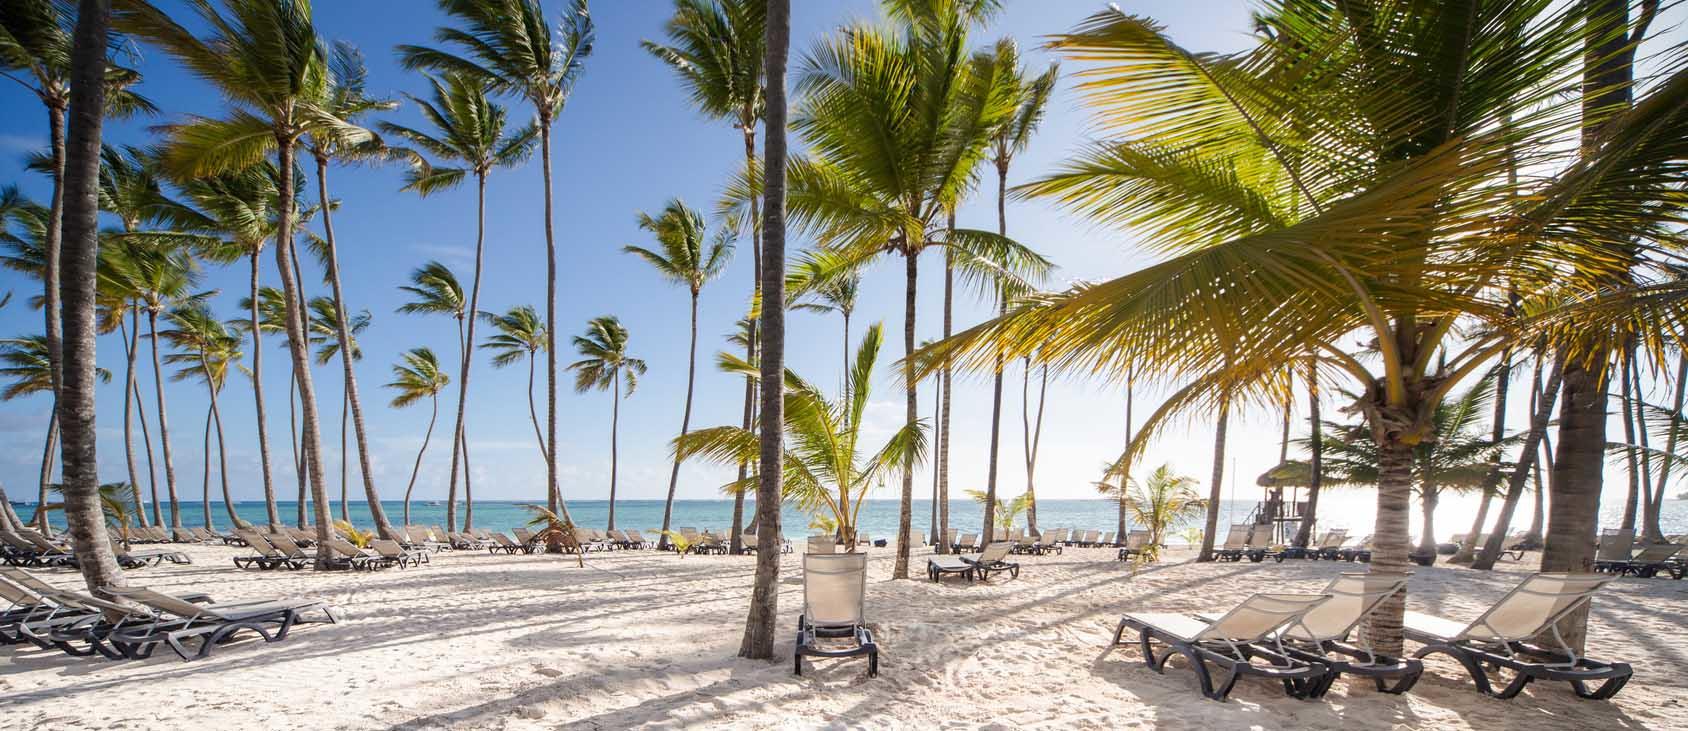 cayman island honeymoons featured image